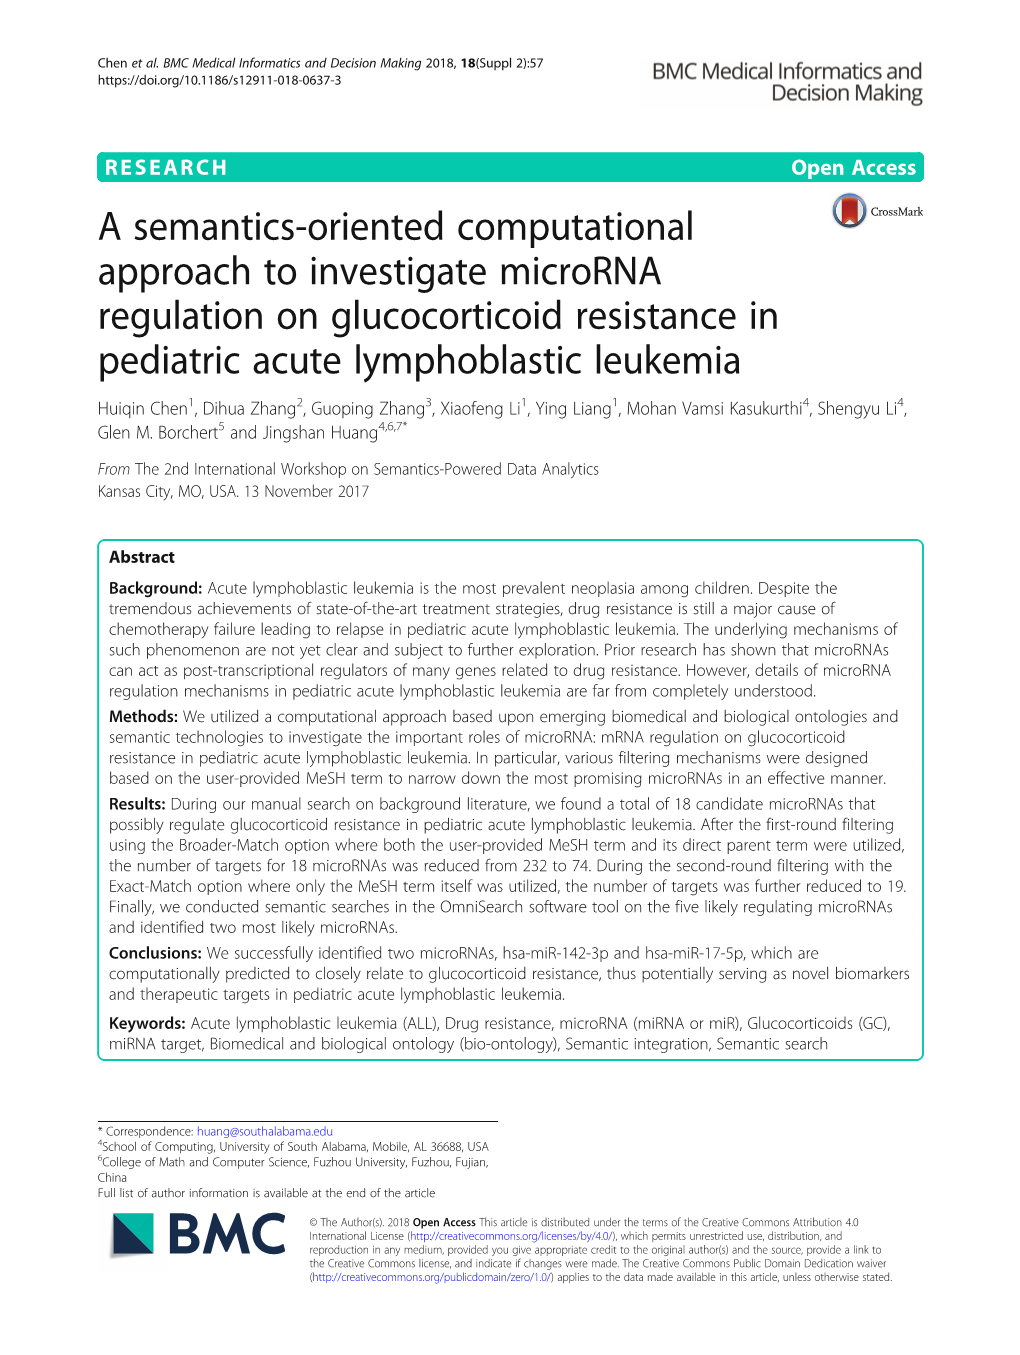 A Semantics-Oriented Computational Approach to Investigate Microrna Regulation on Glucocorticoid Resistance in Pediatric Acute L